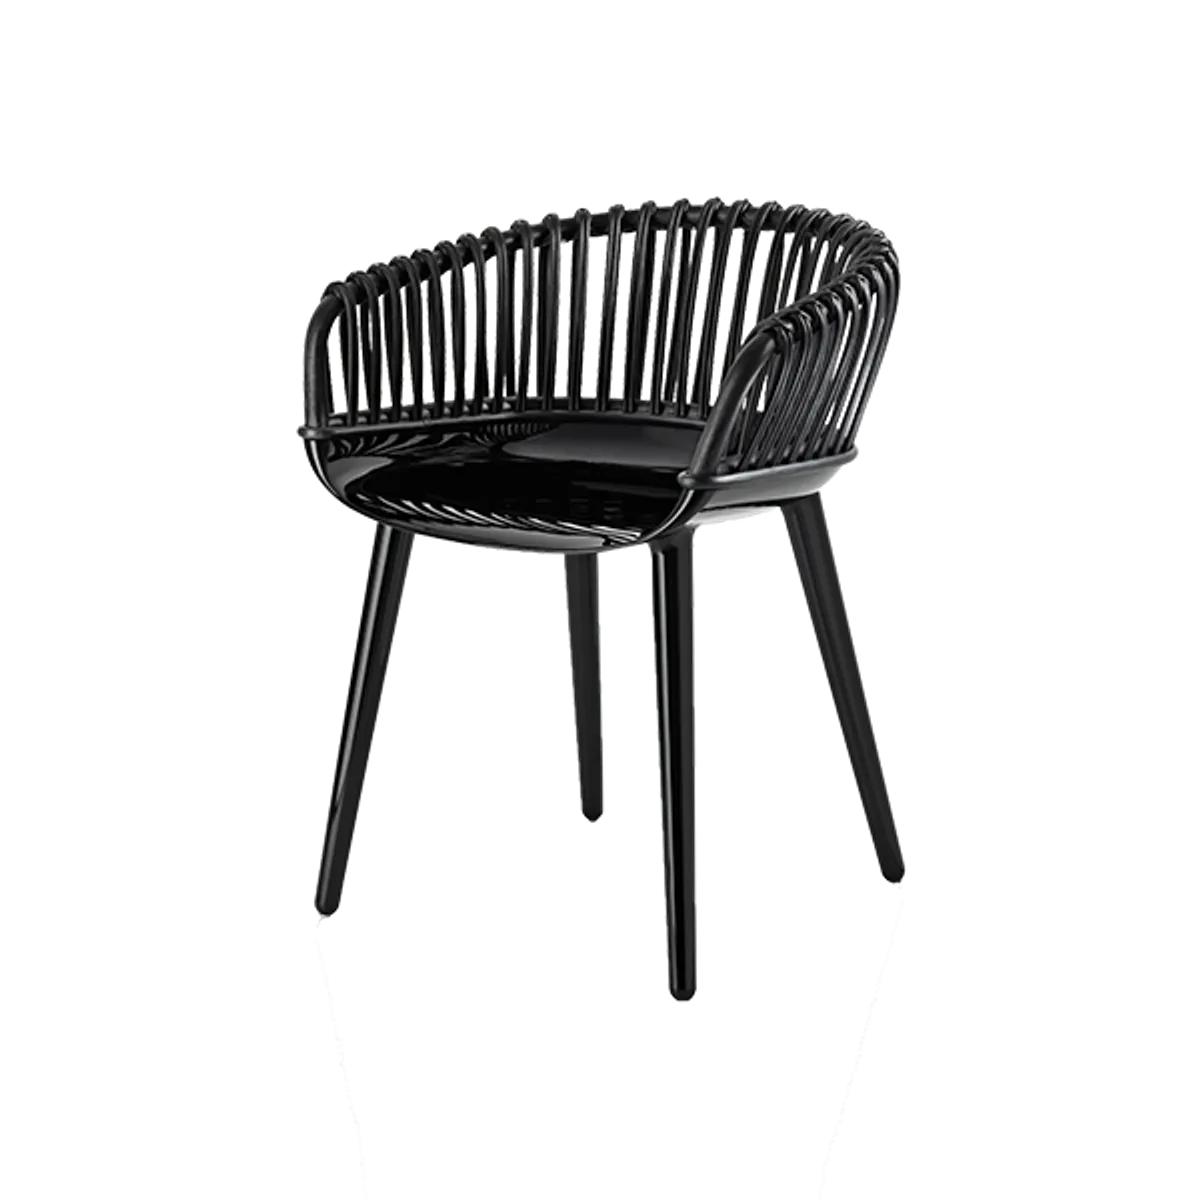 Web Cyborg Chair 2